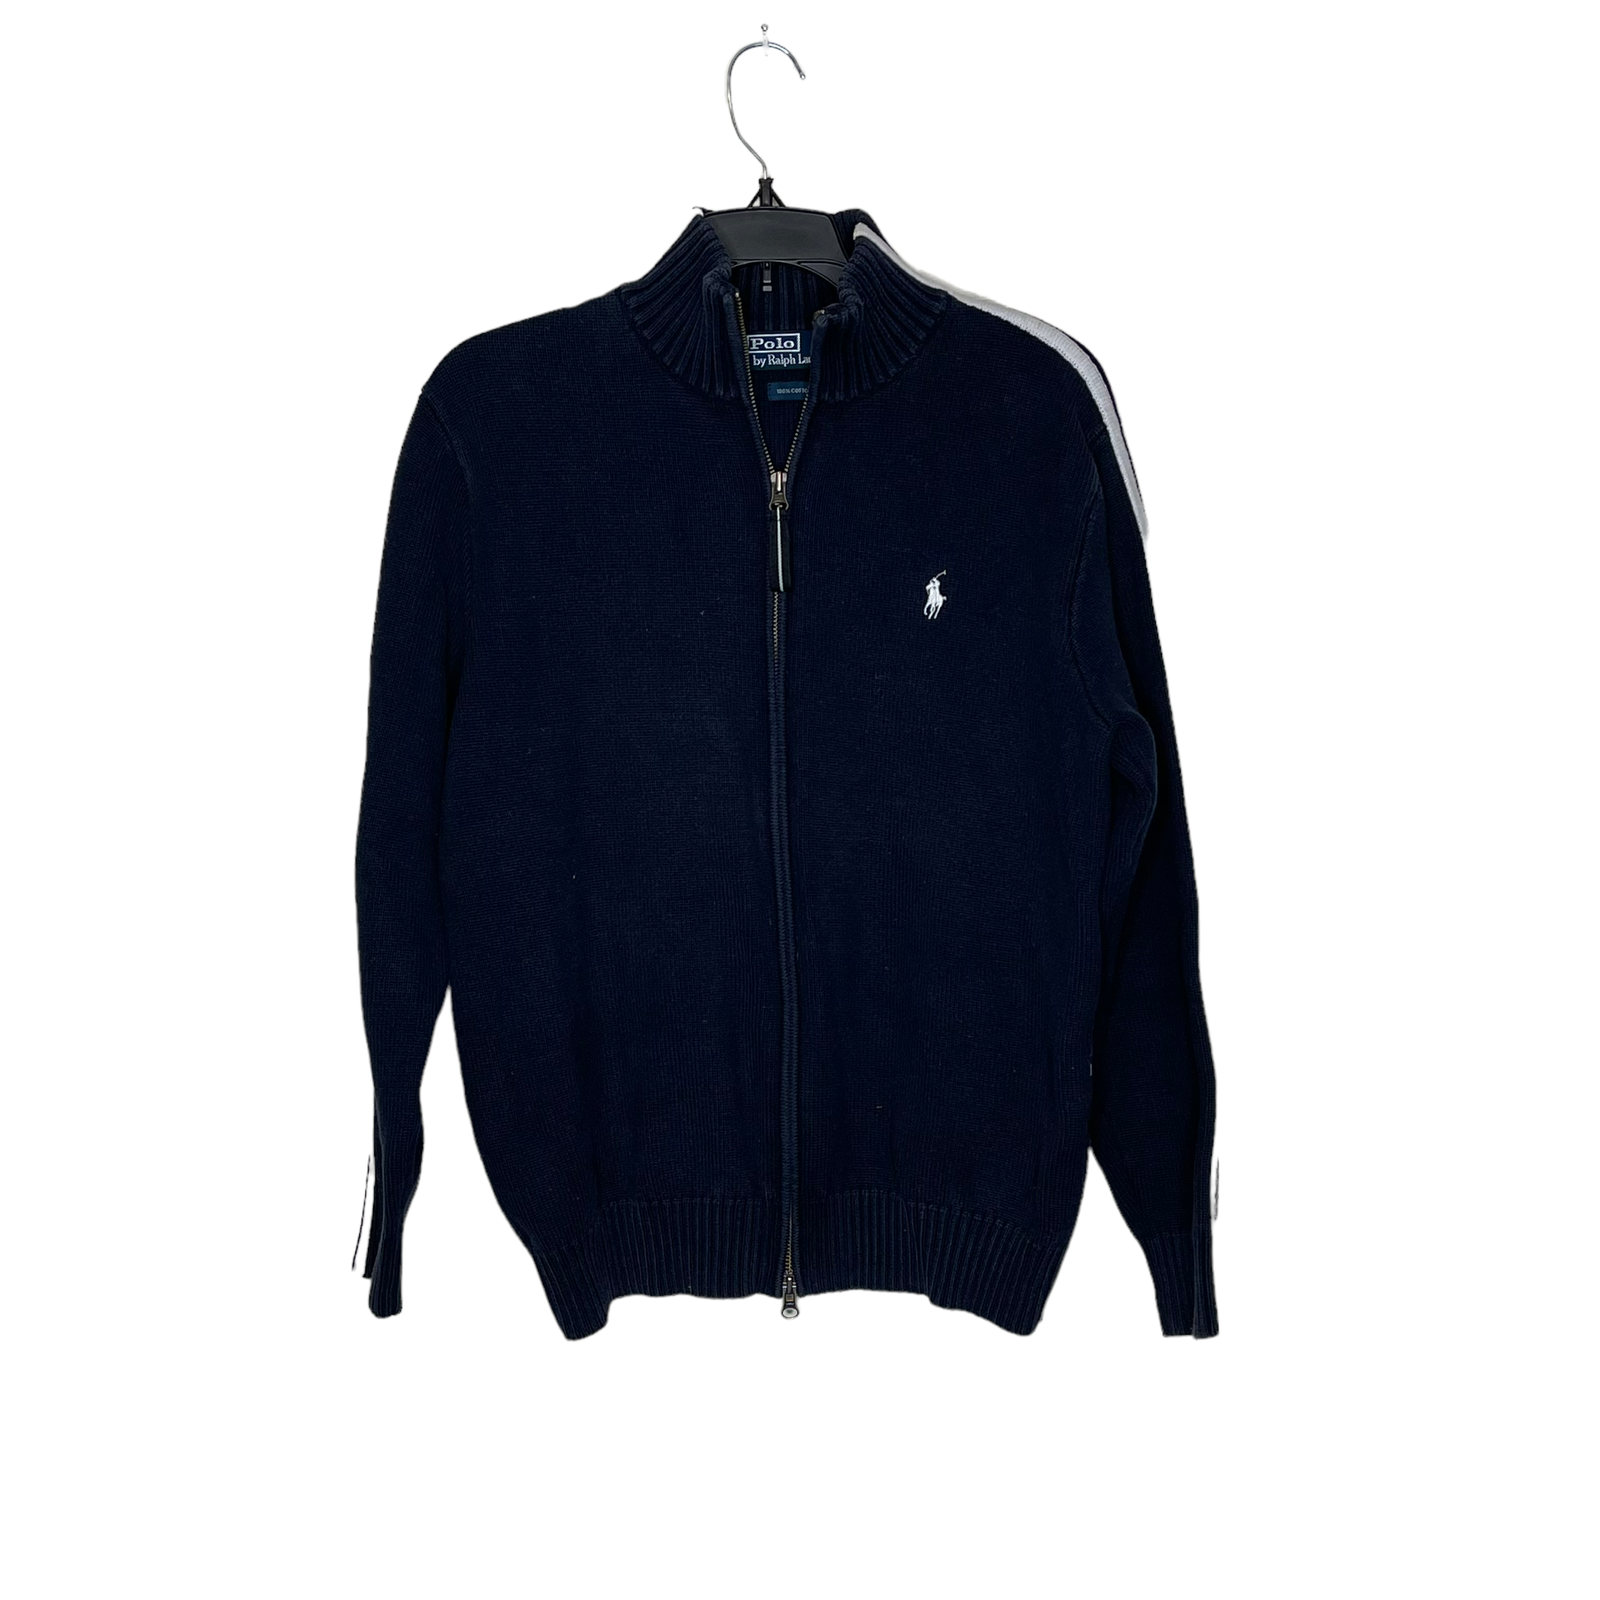 Primary image for Polo Ralph Lauren Full Zip Sweater Jacket Size Medium Navy White Sleeve Stripes